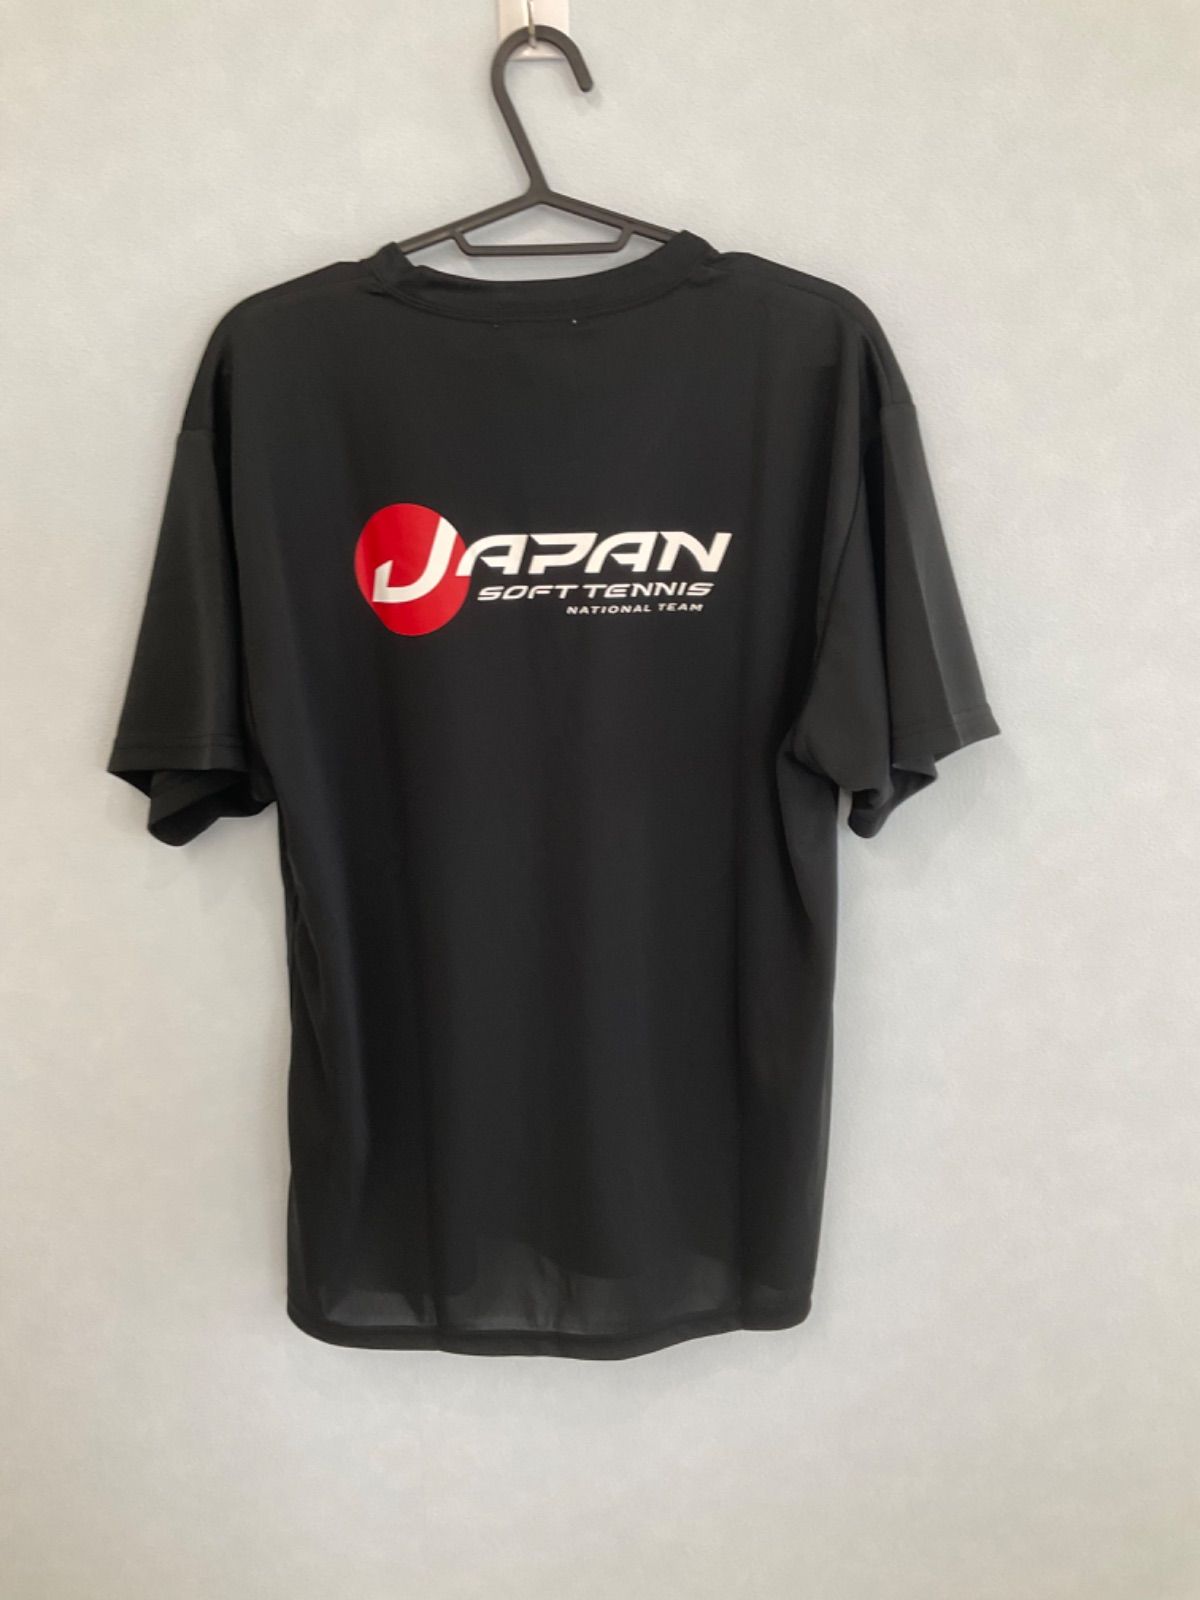 YONEX Tシャツ 日本ナショナルチームロゴ入り 限定 カタログ未掲載 